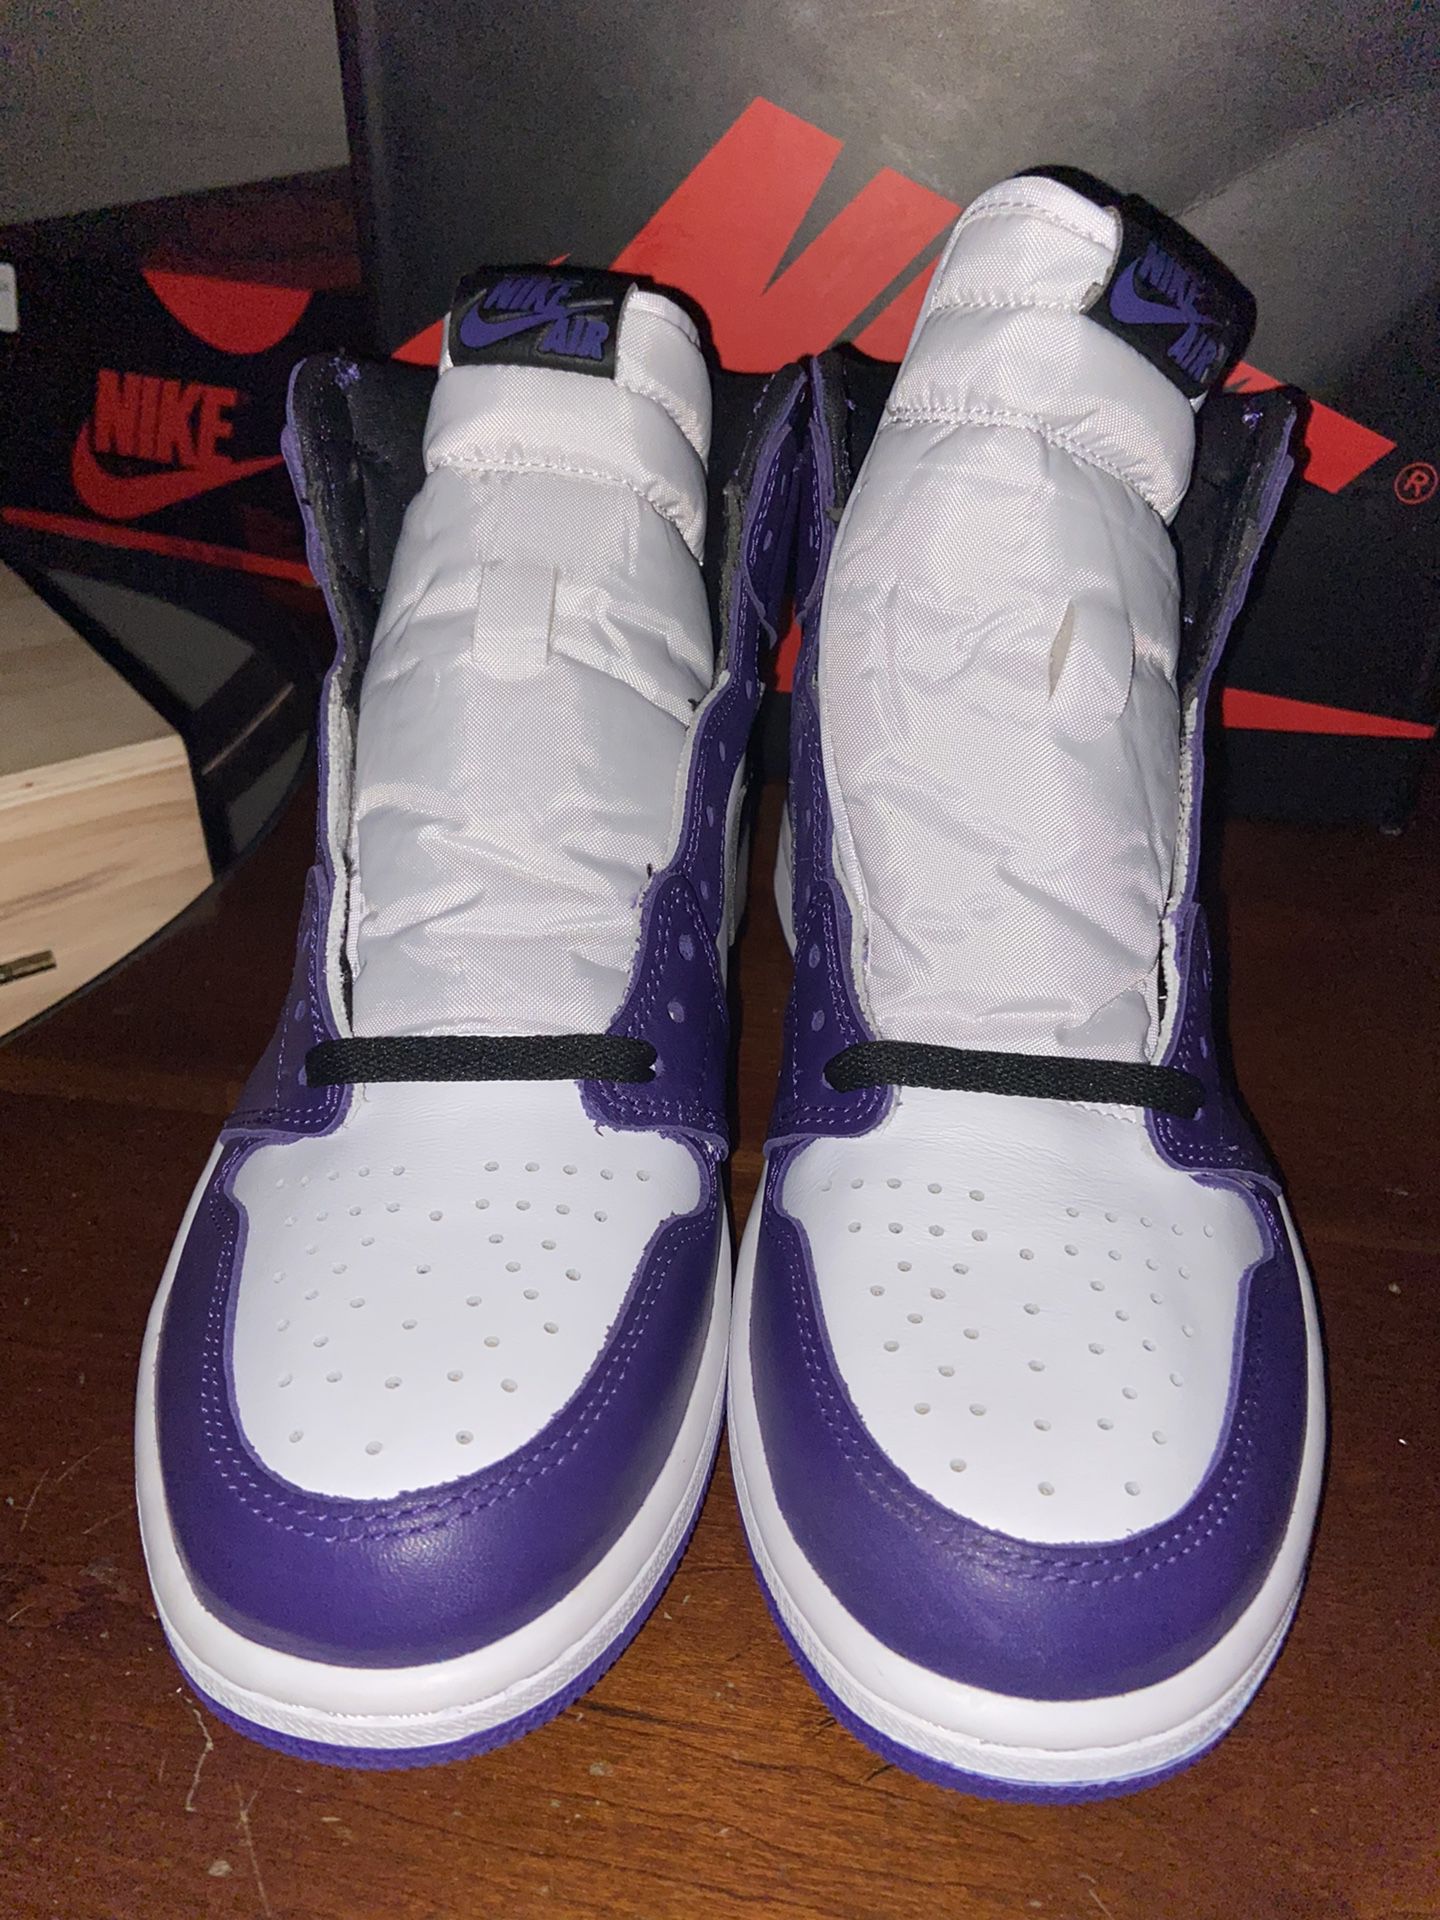 Jordan 1 Court purple